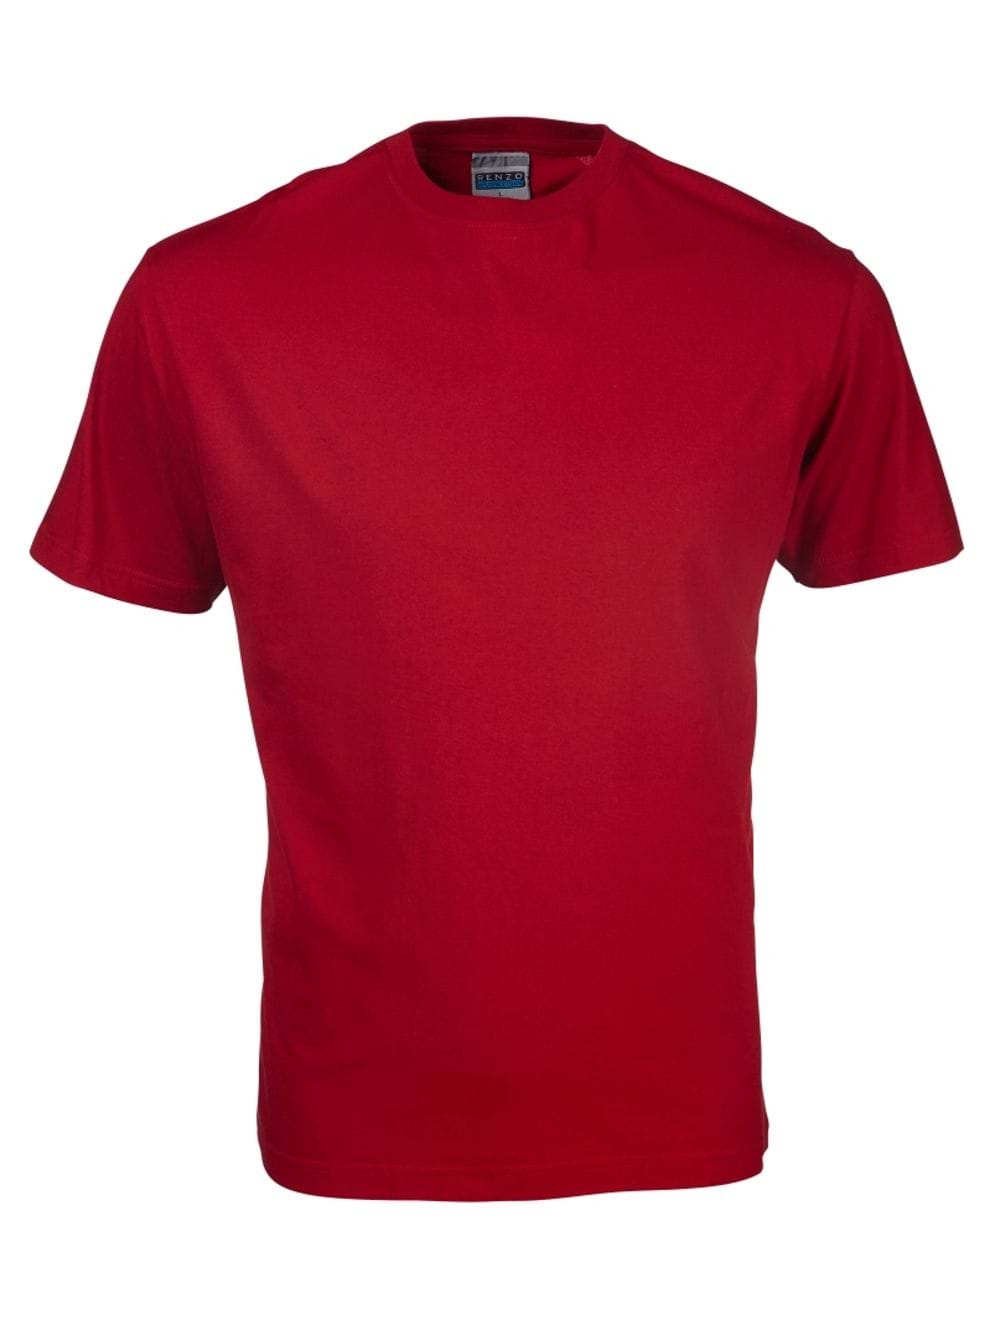 165G Crew Neck T-Shirt - Cerise Red